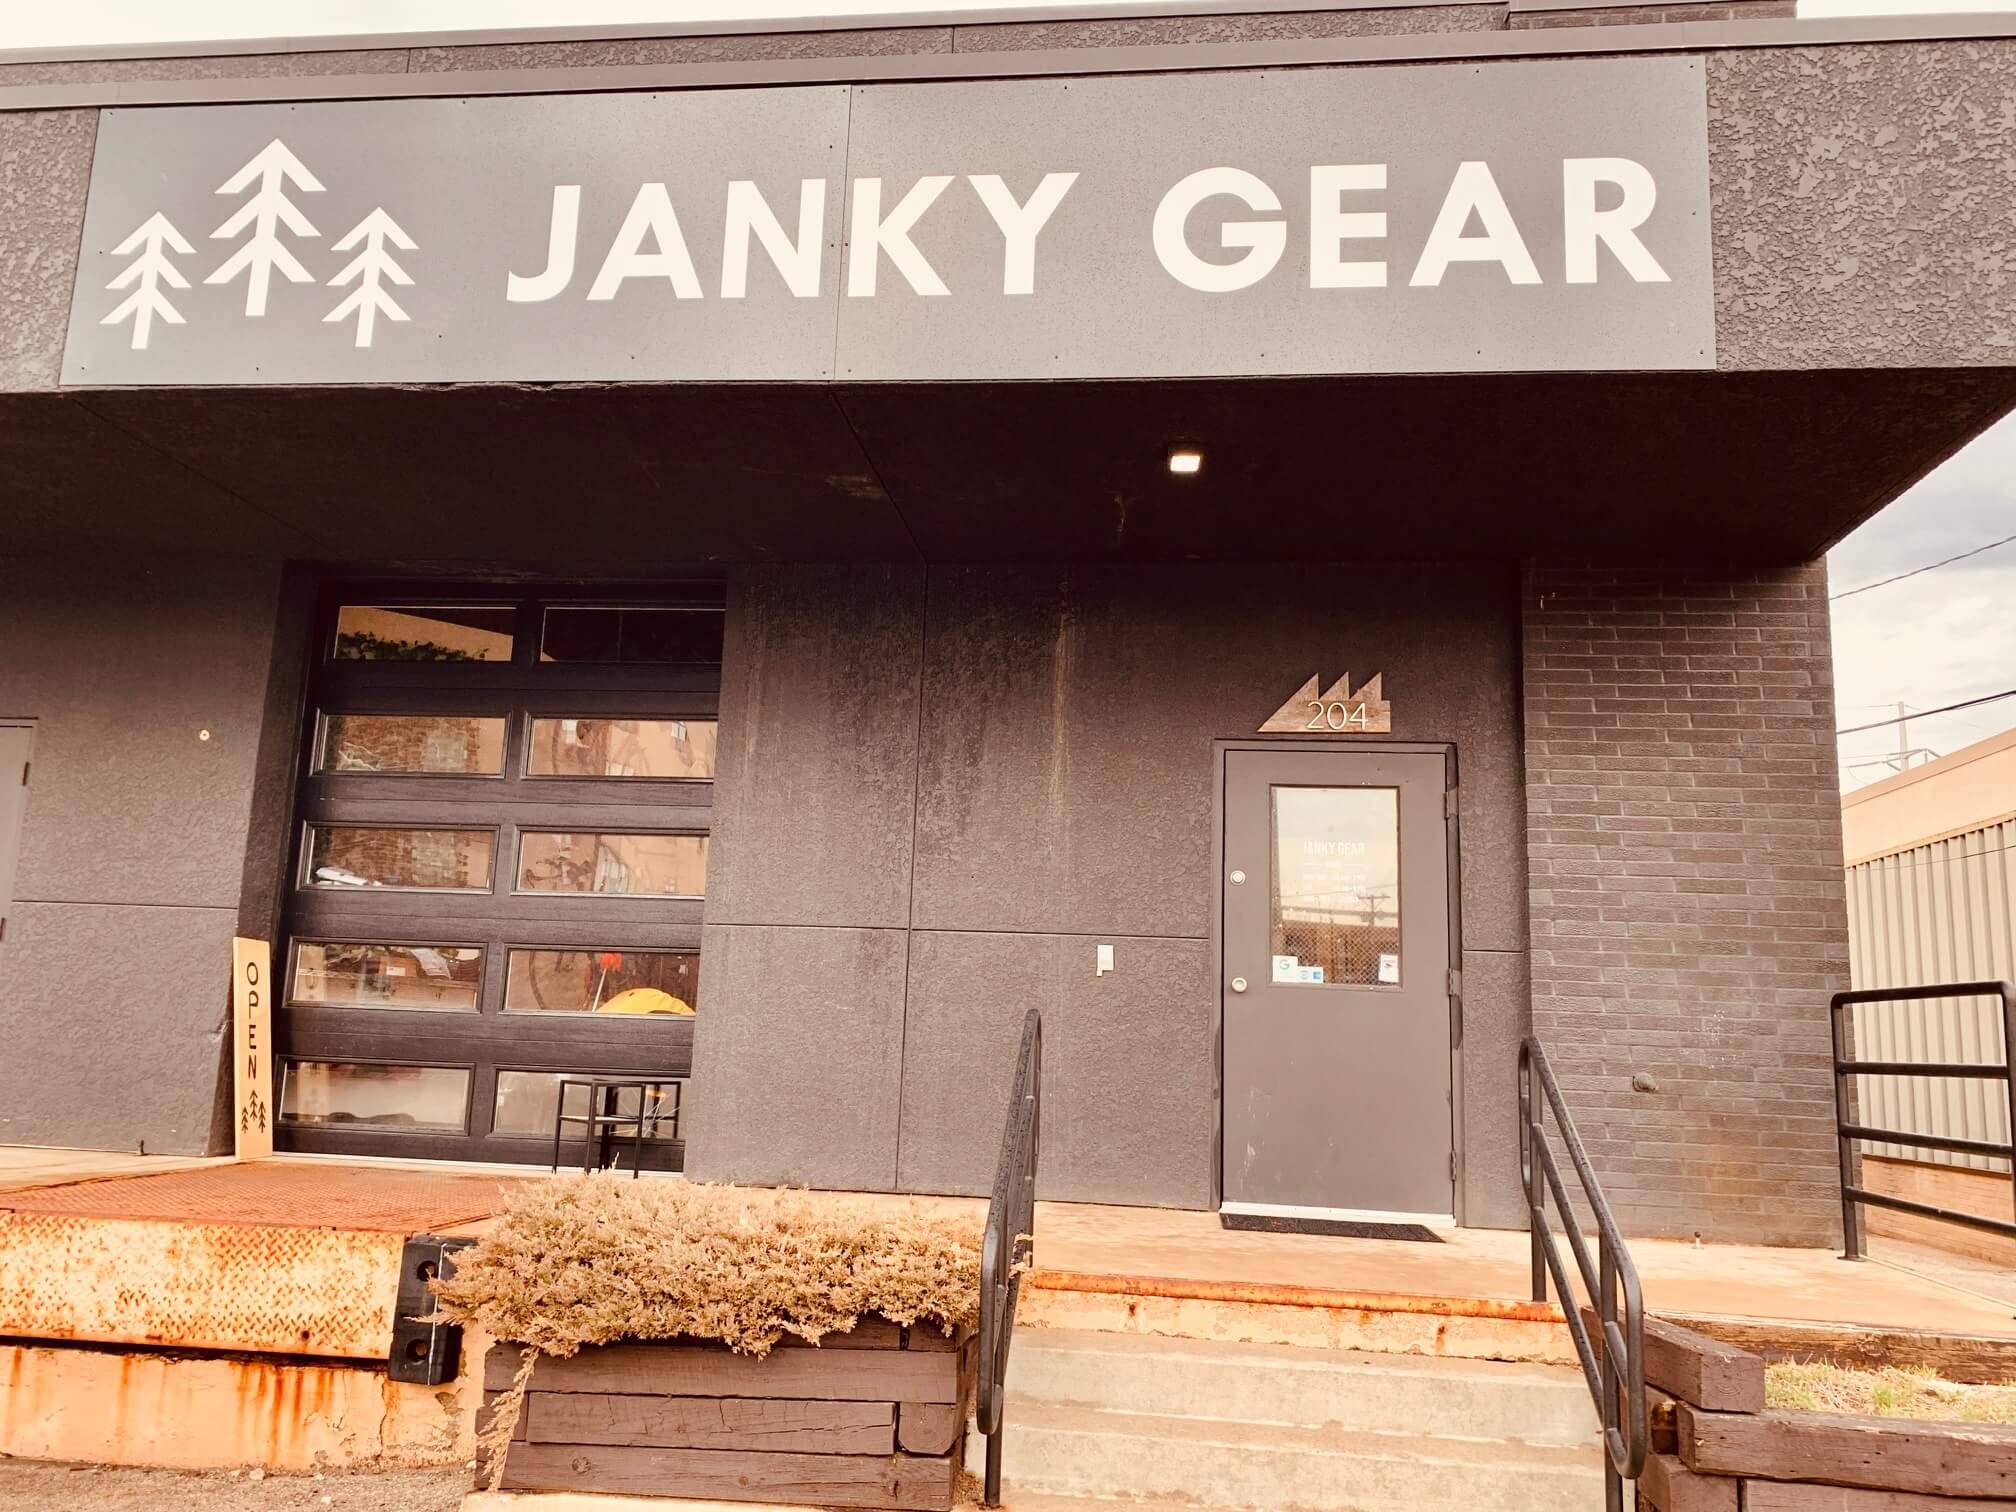 Janky grear-간판과-입구-문